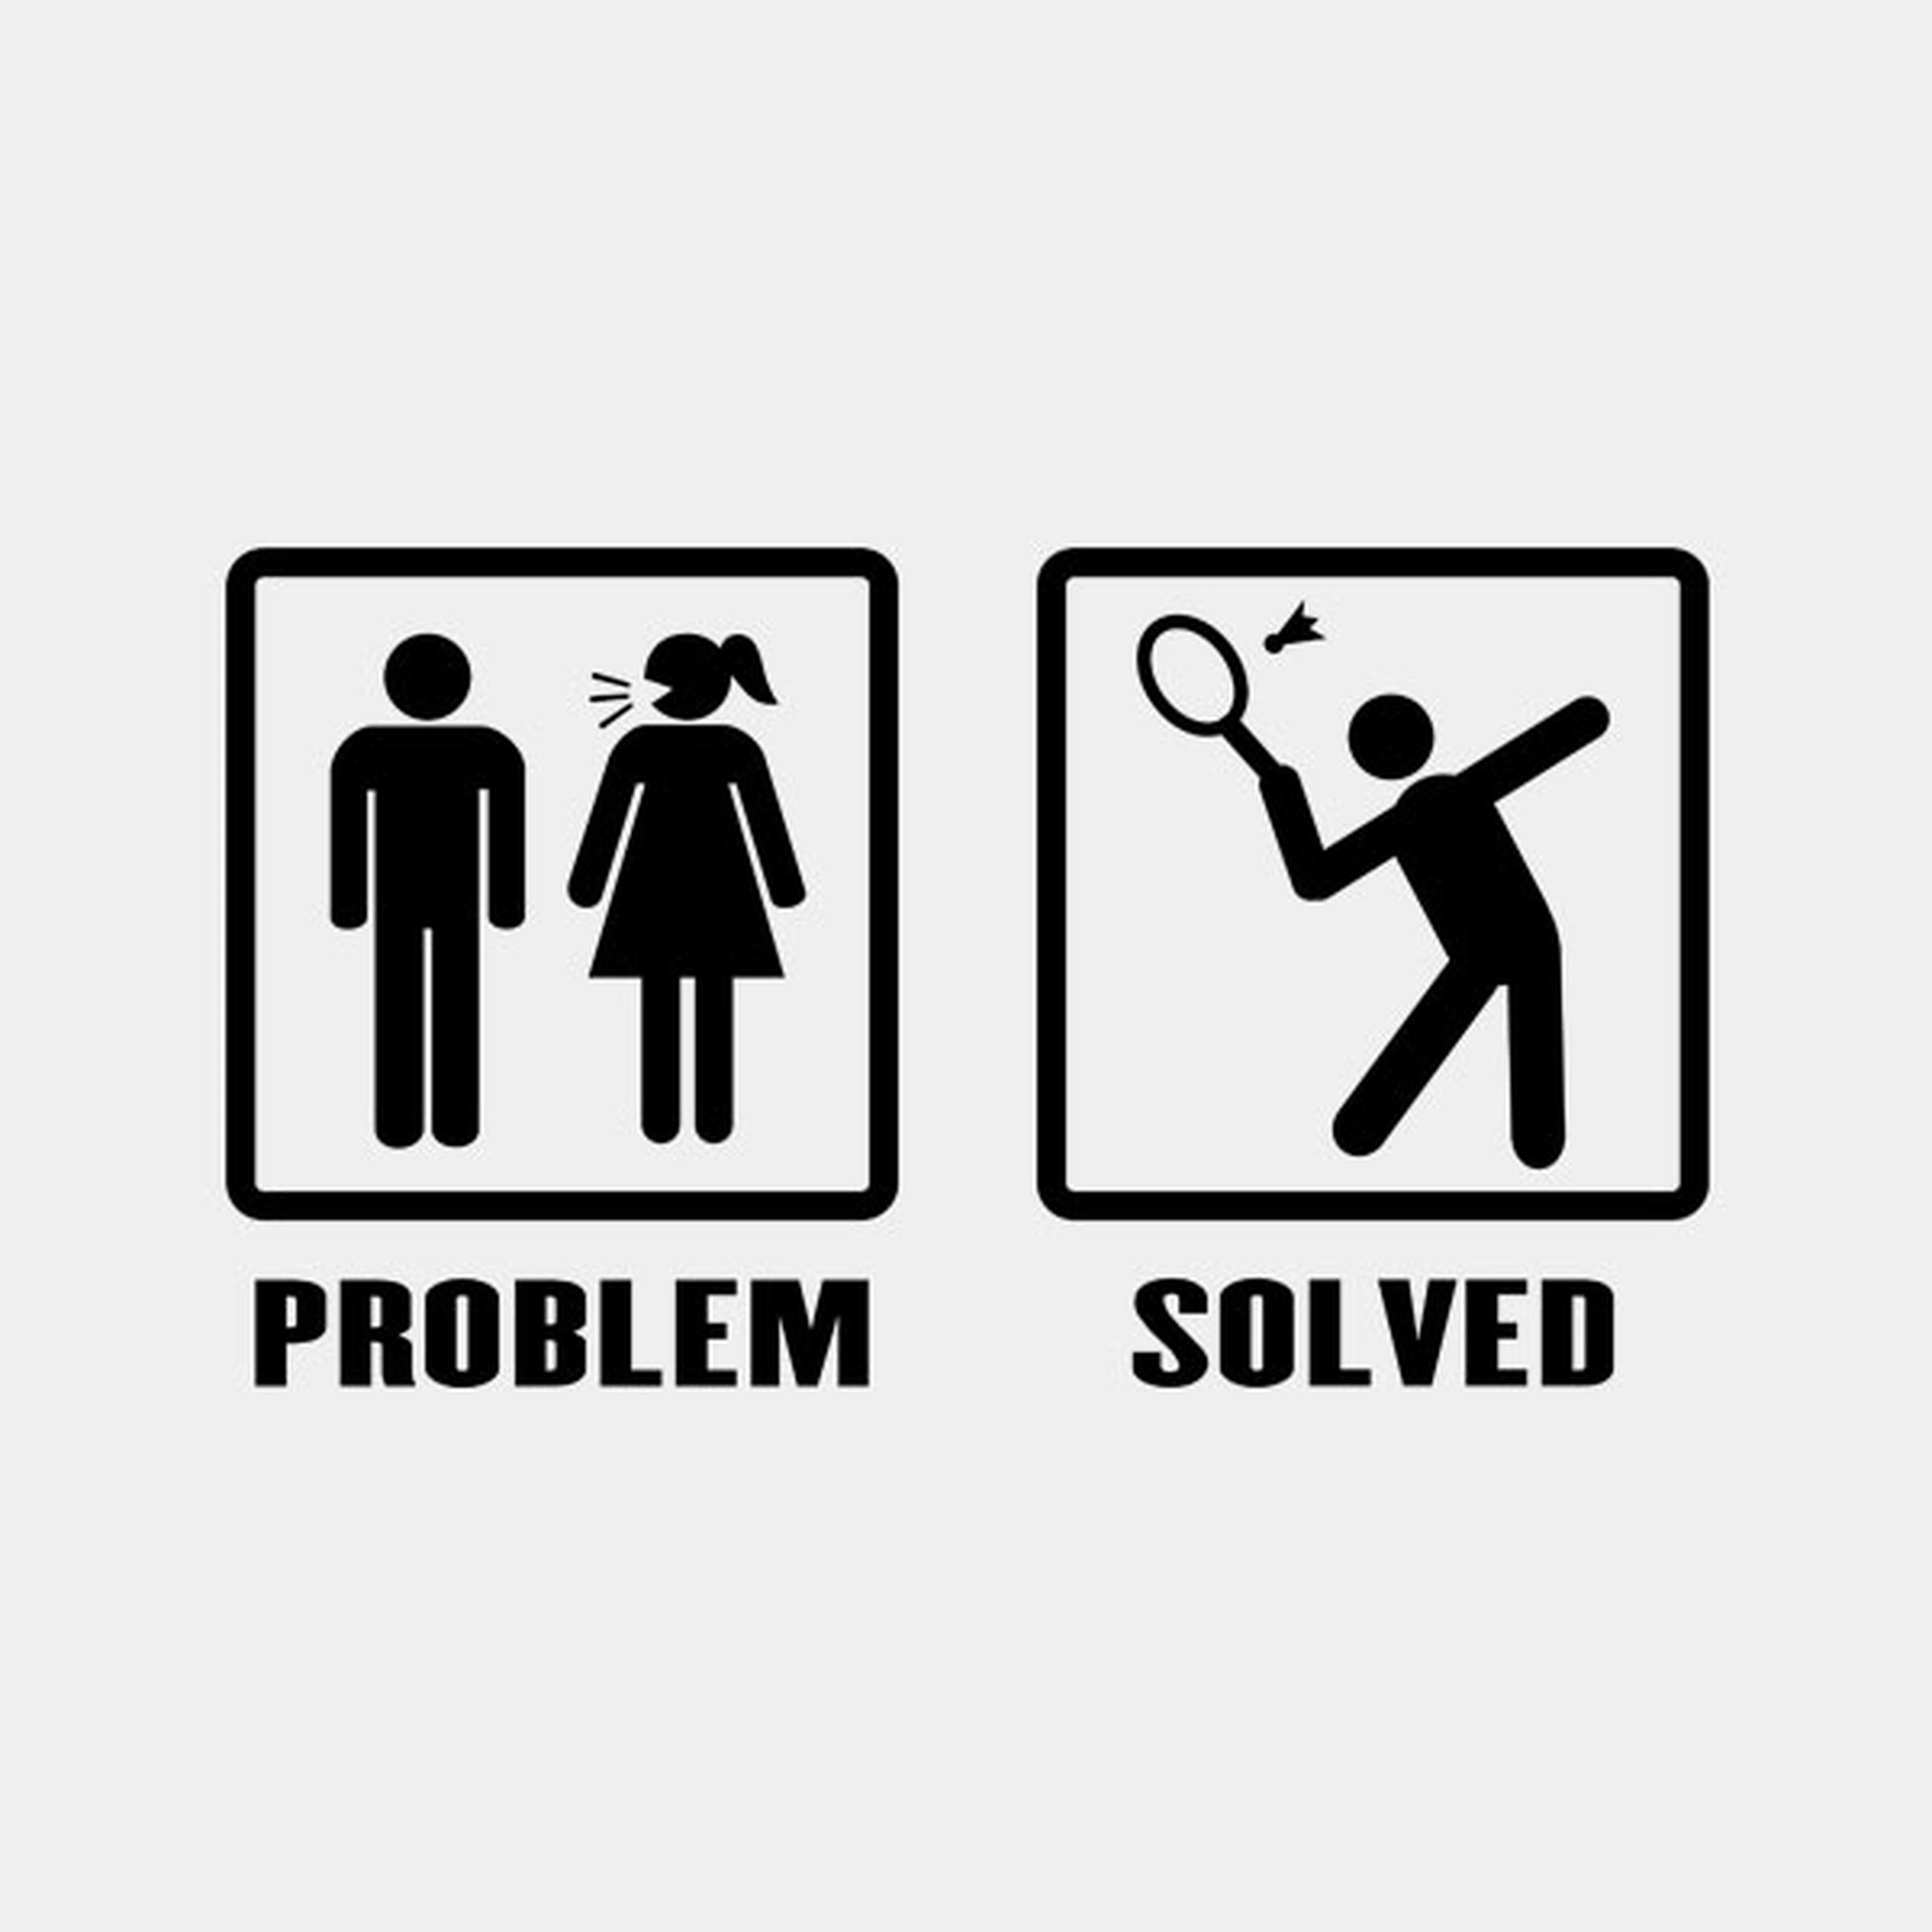 Problem - Solved (Badminton) - T-shirt